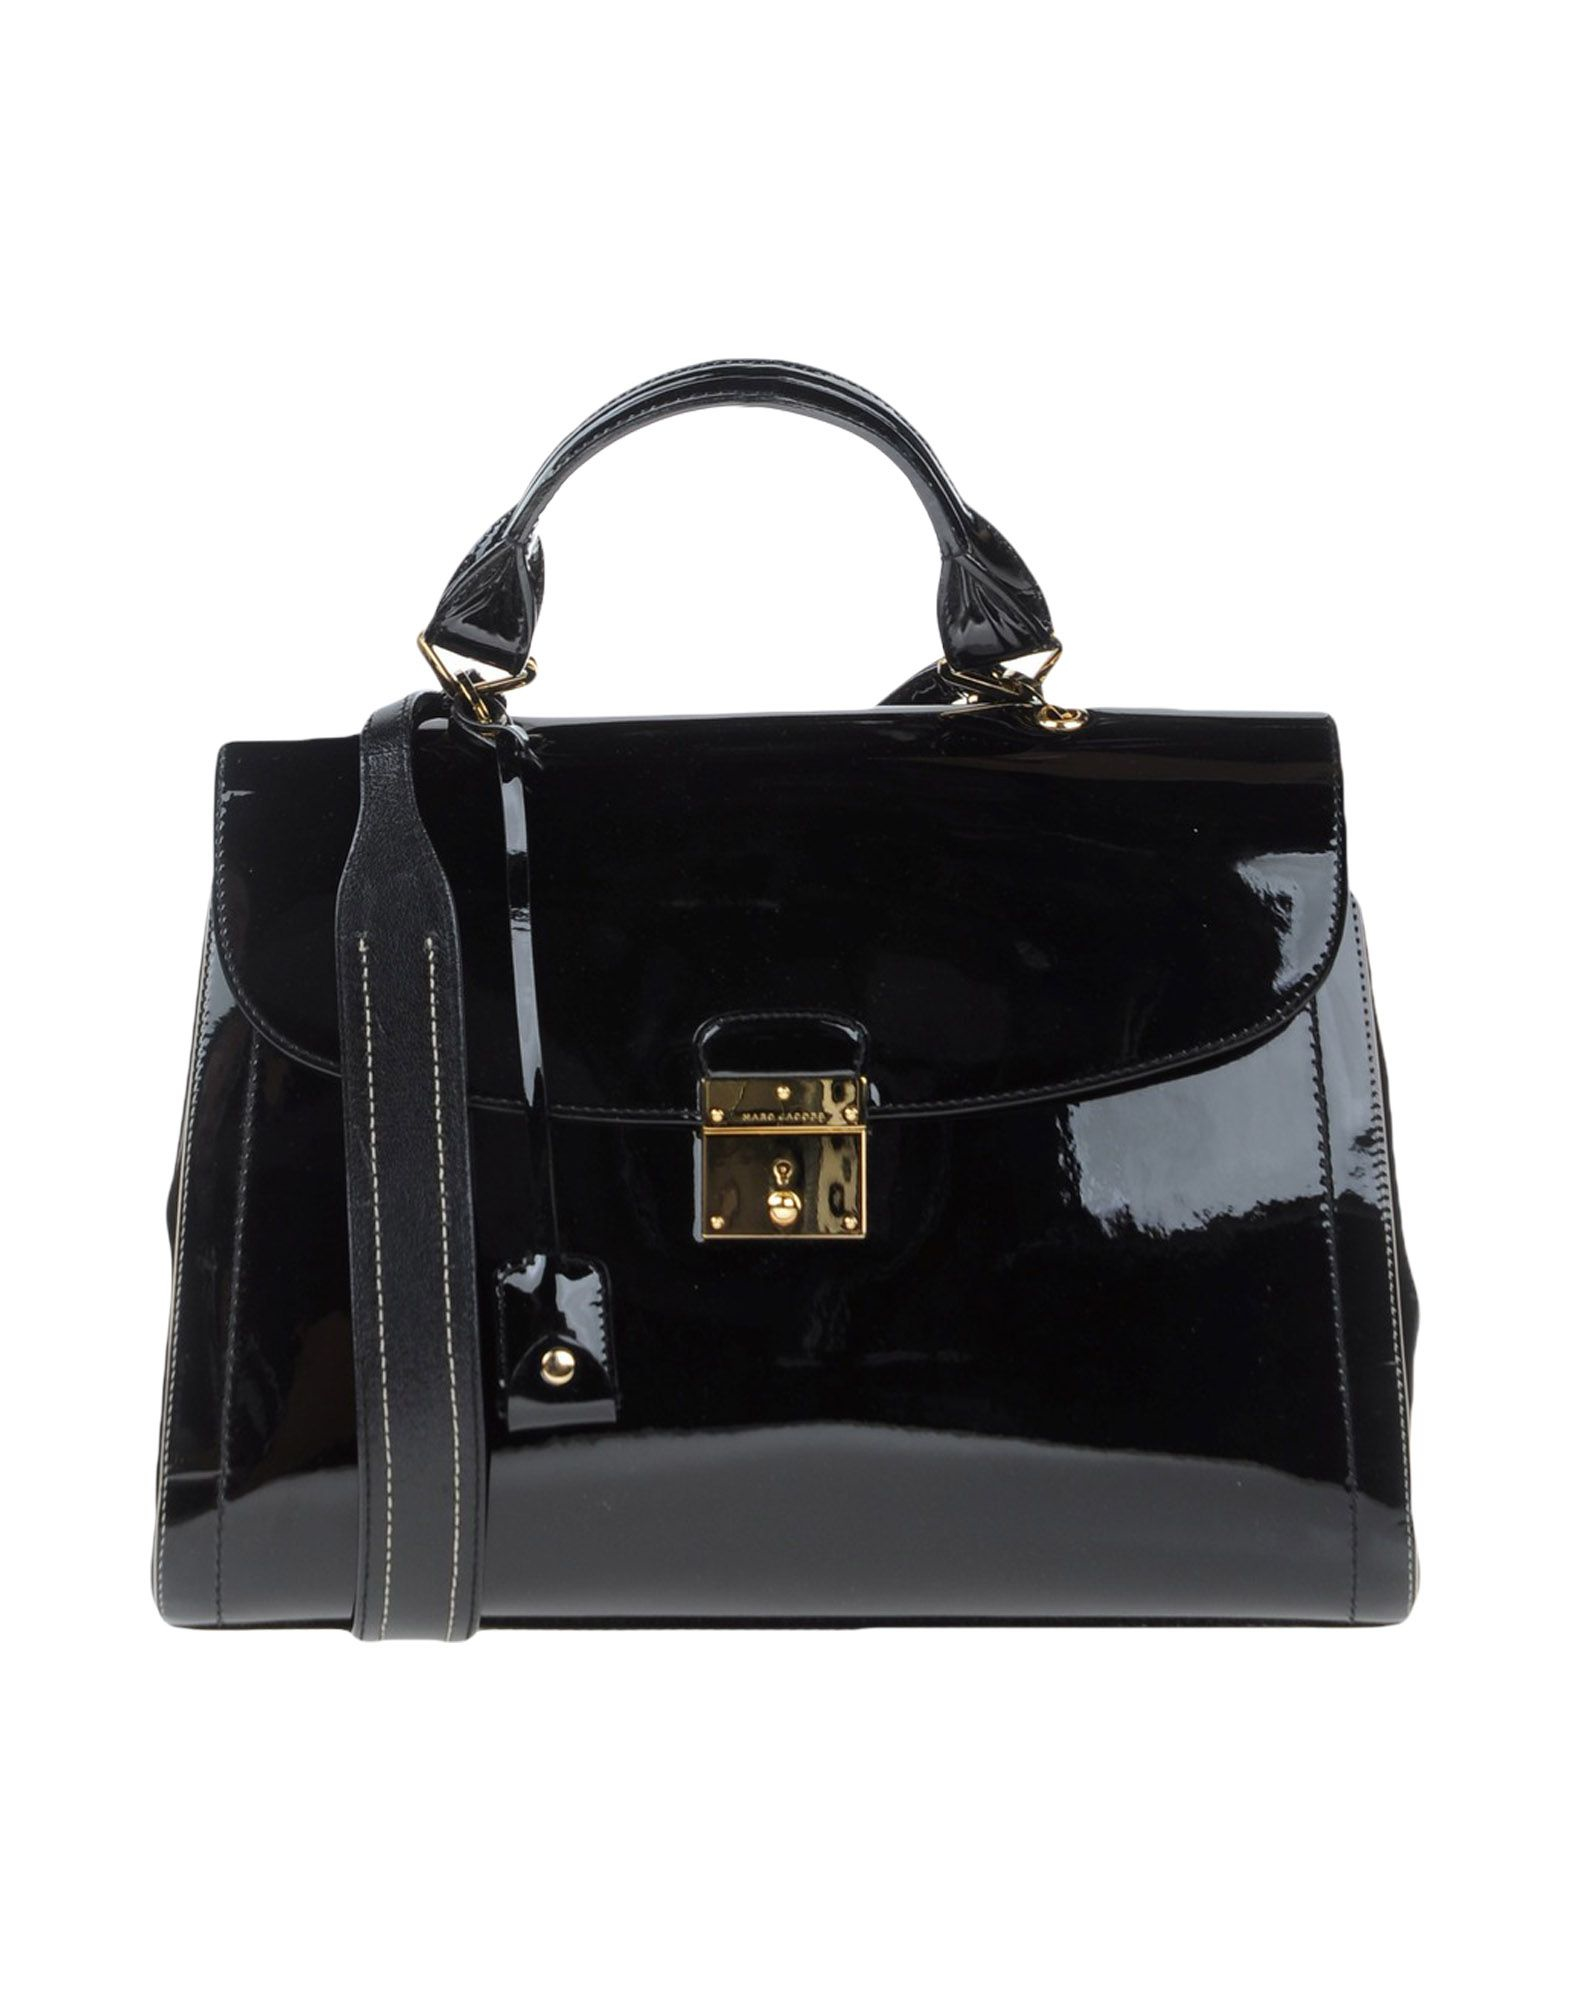 Marc Jacobs Leather Handbag in Black - Lyst